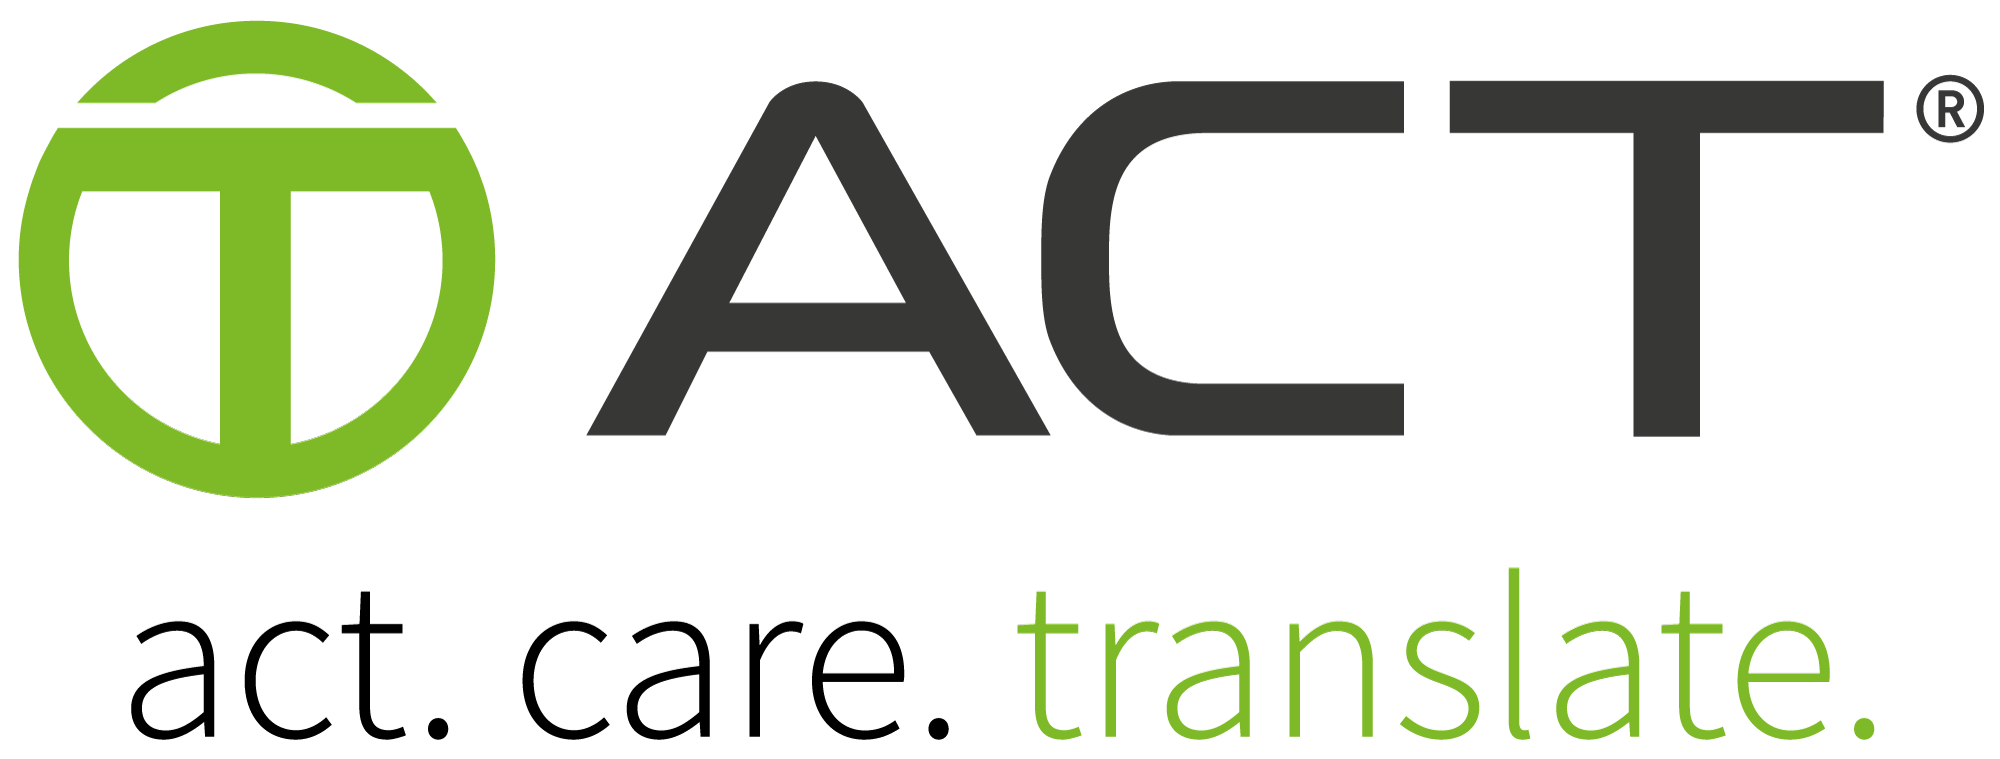 ACT Translations